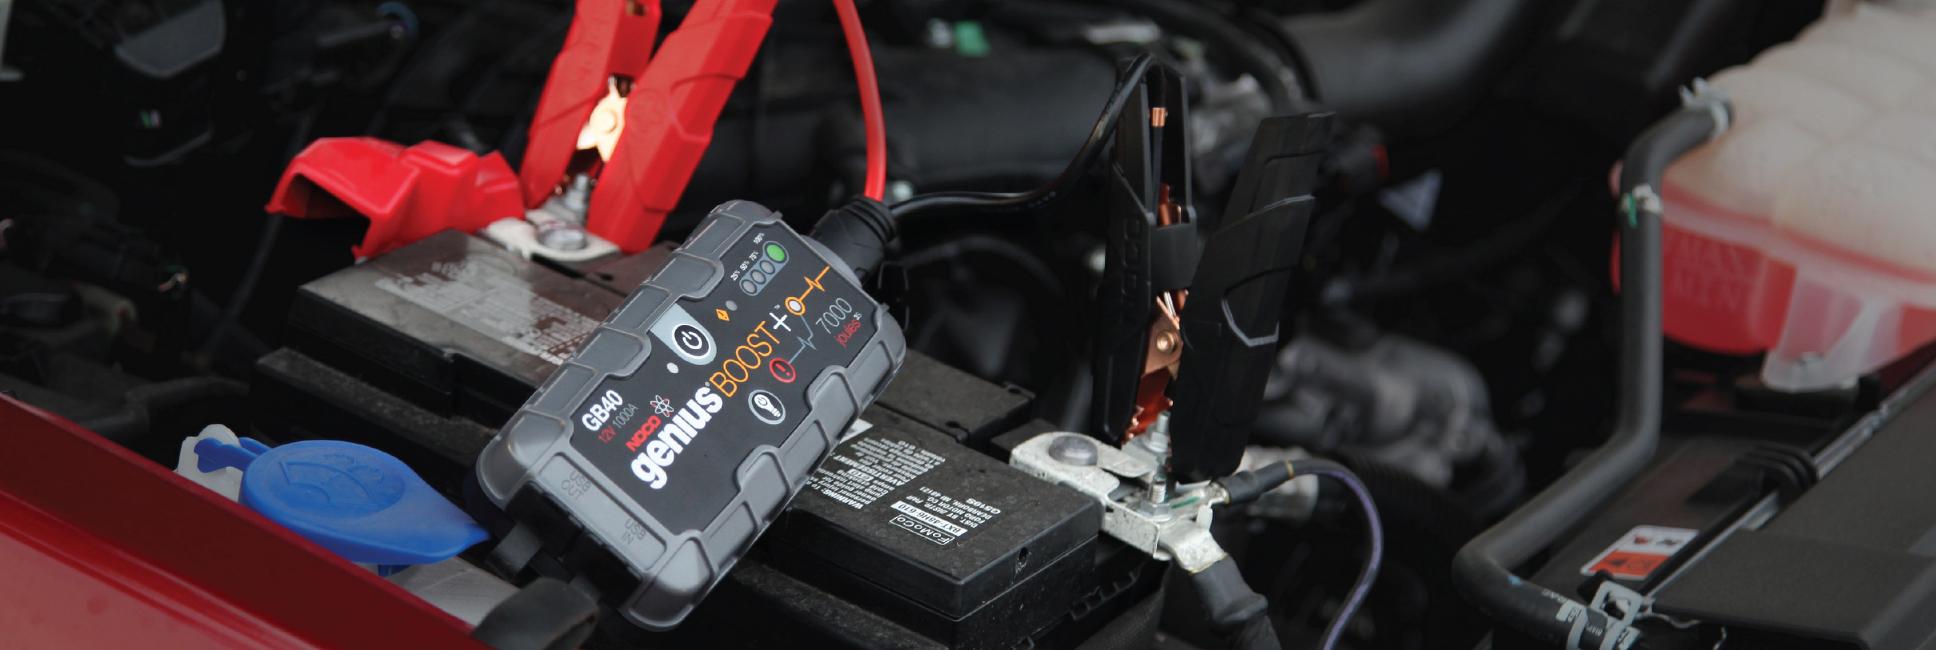 GB40-Lithium-Battery-Jump-Starter-Booster-Pack-Jump-Starting-Car